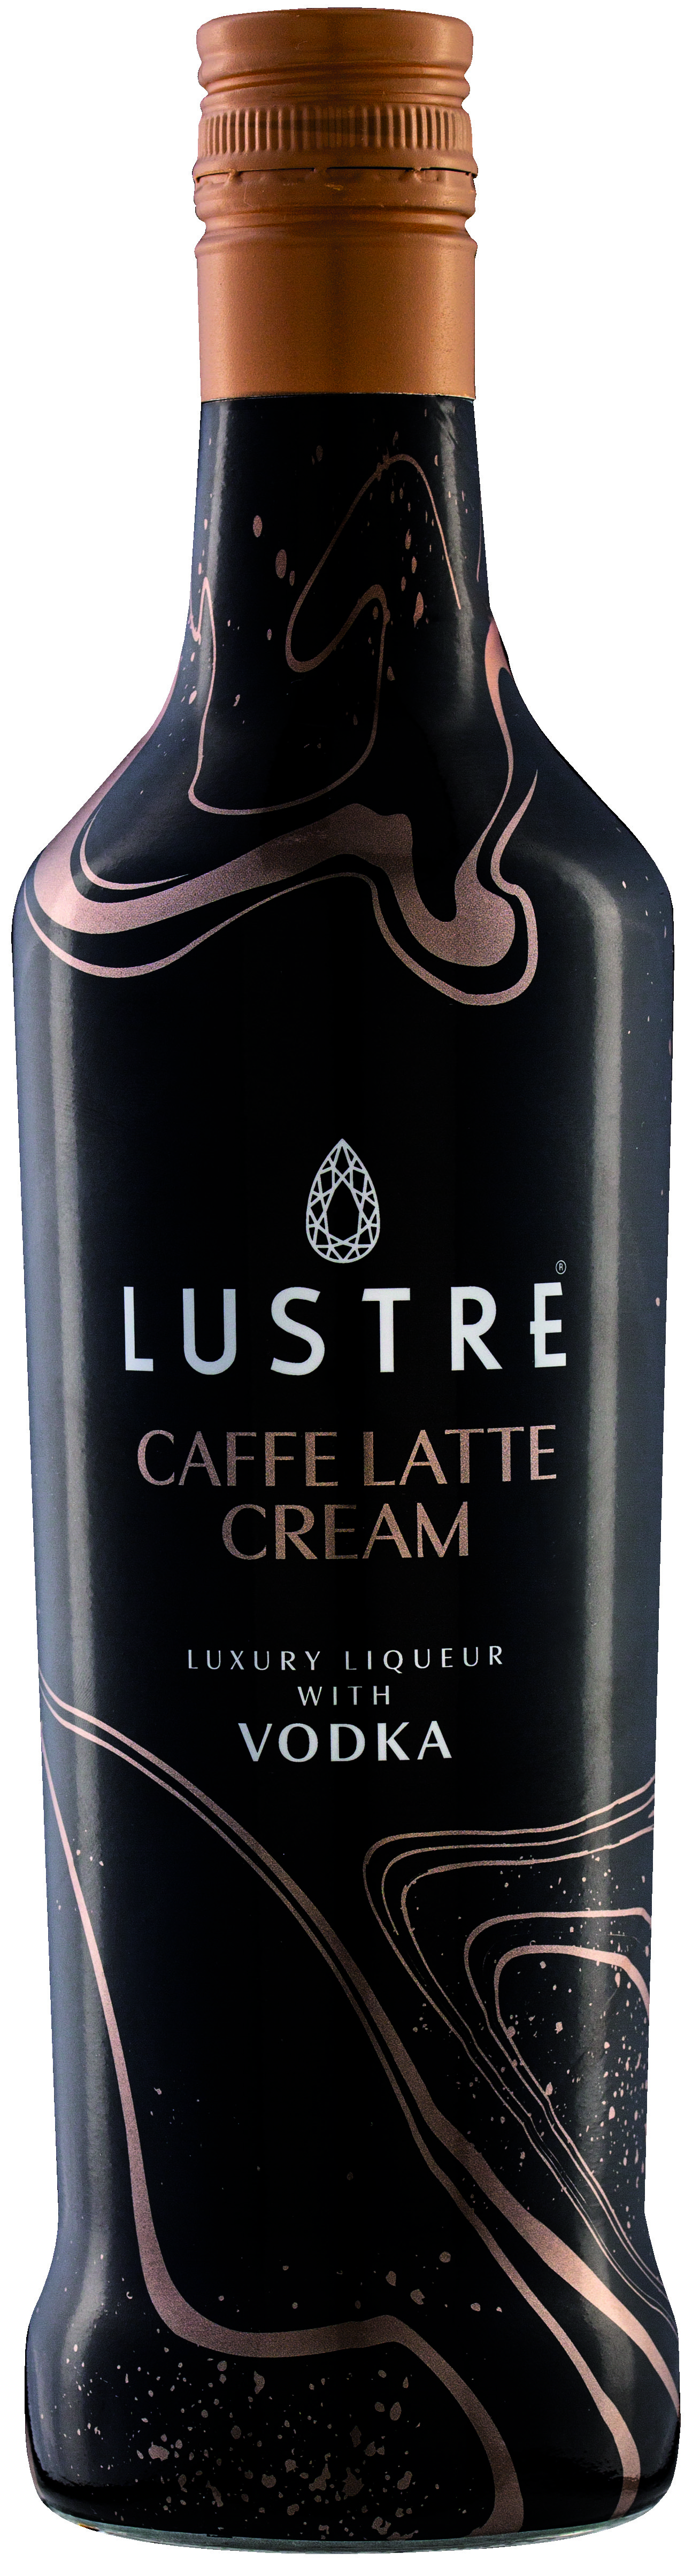 LUSTRE CAFFE LATTE CREAM WITH VODKA 15% 70CL